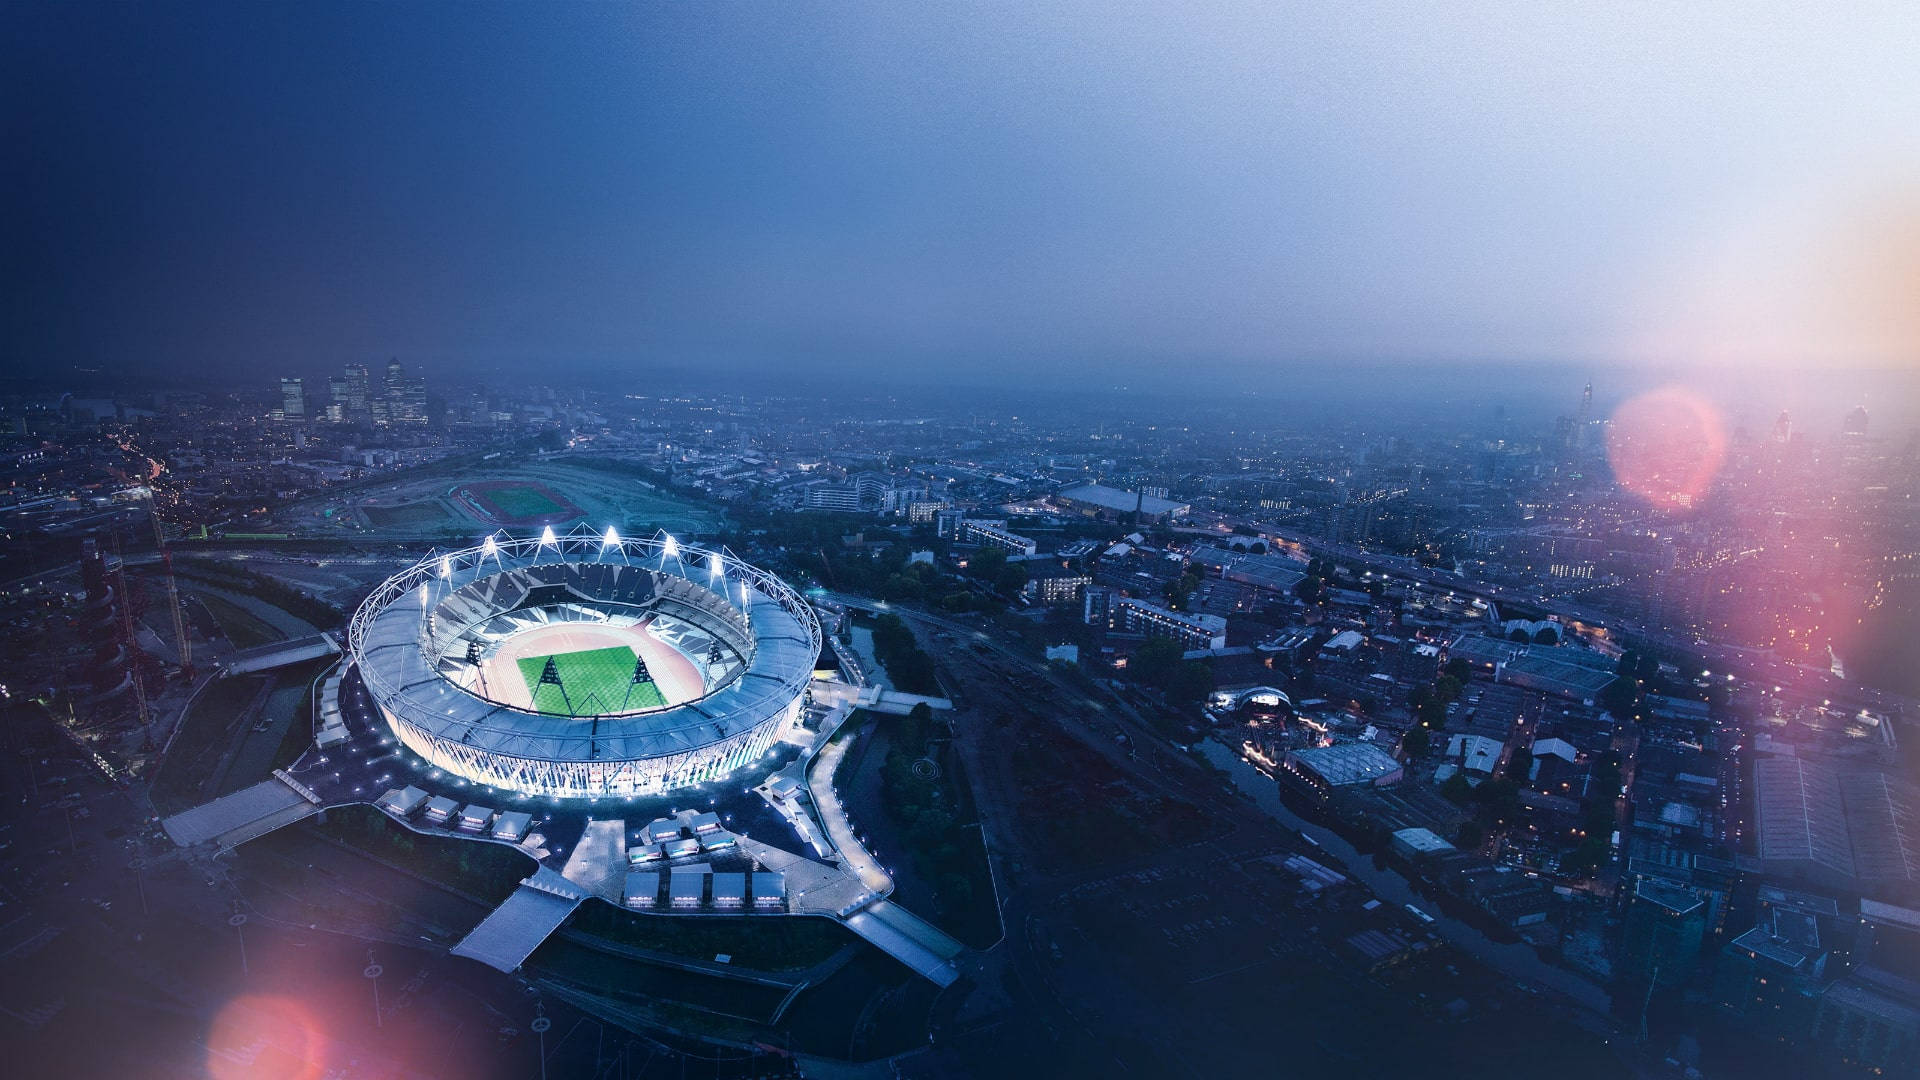 Olympics Stadium At Night